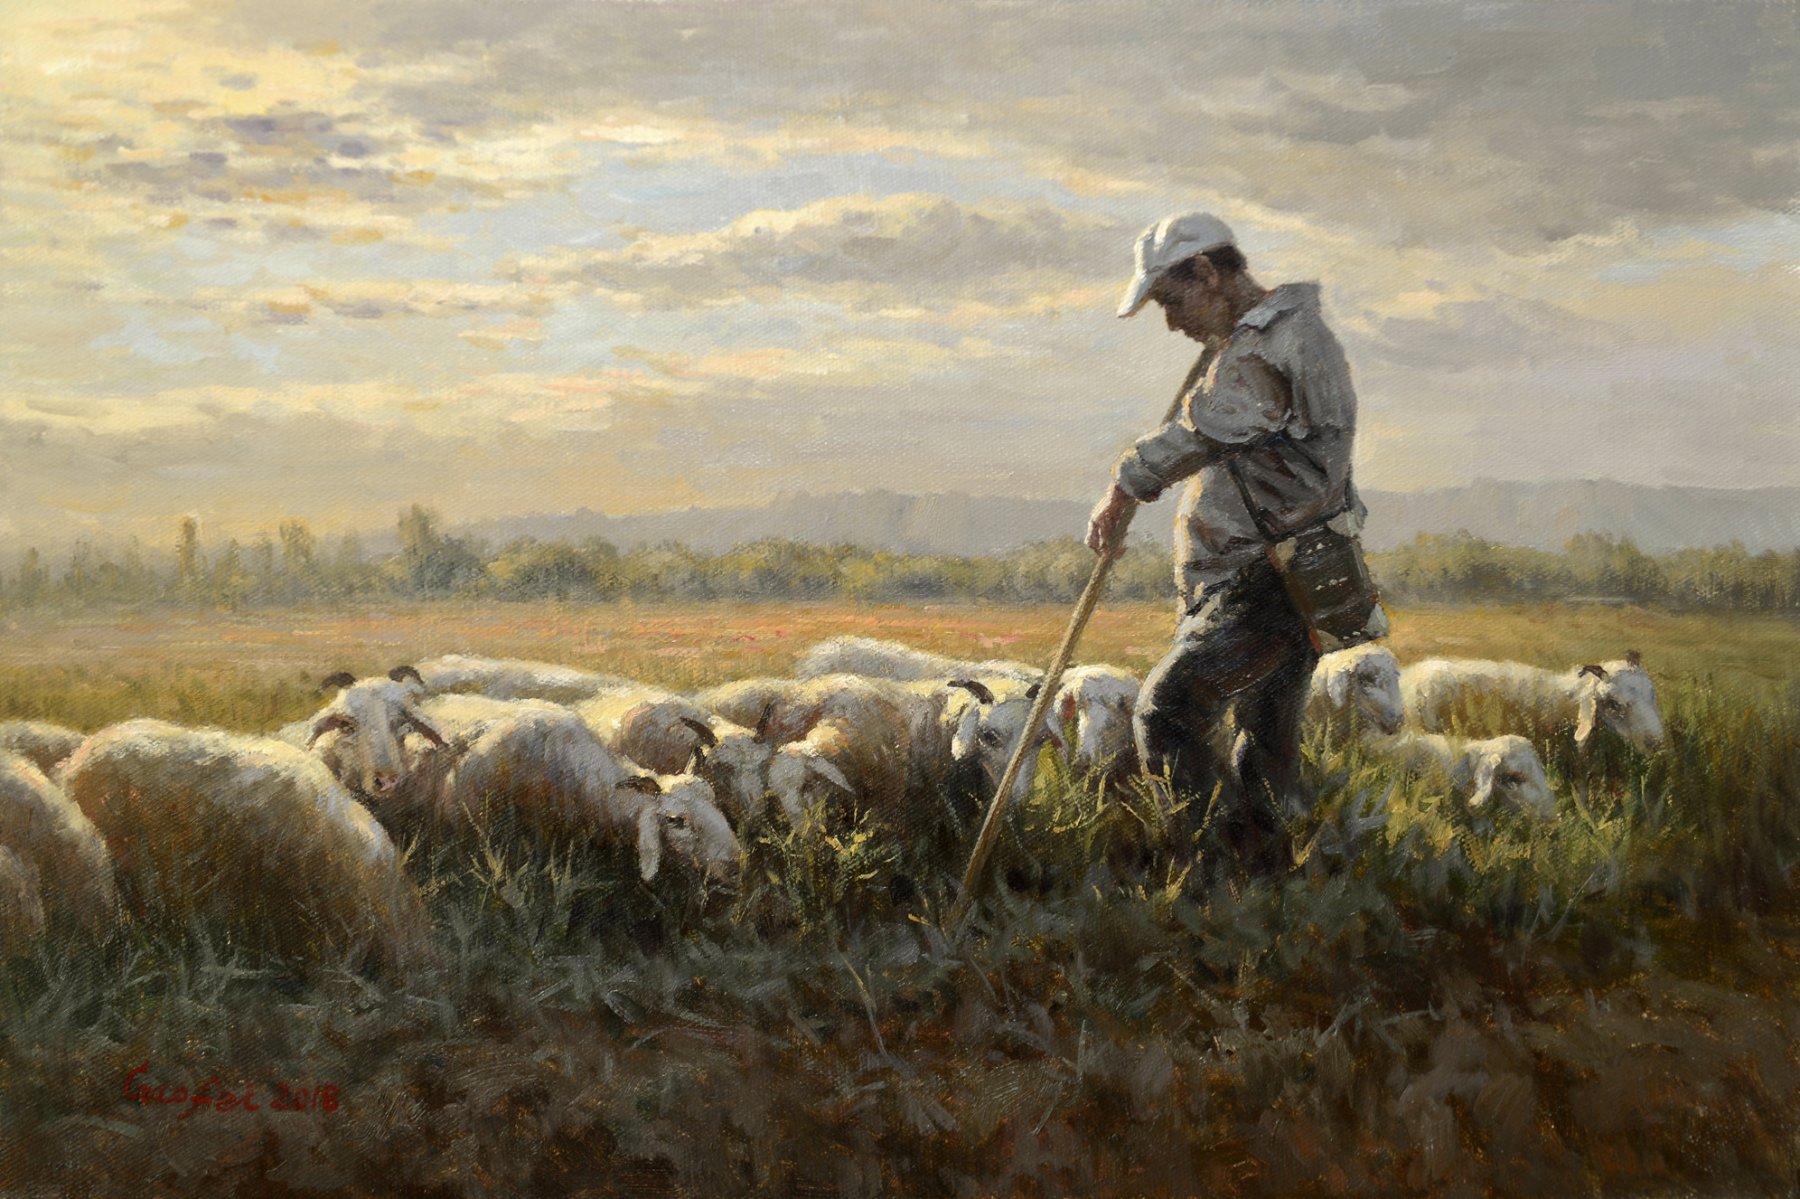 《牧羊》
Shepherd - Fei Gao 高飞